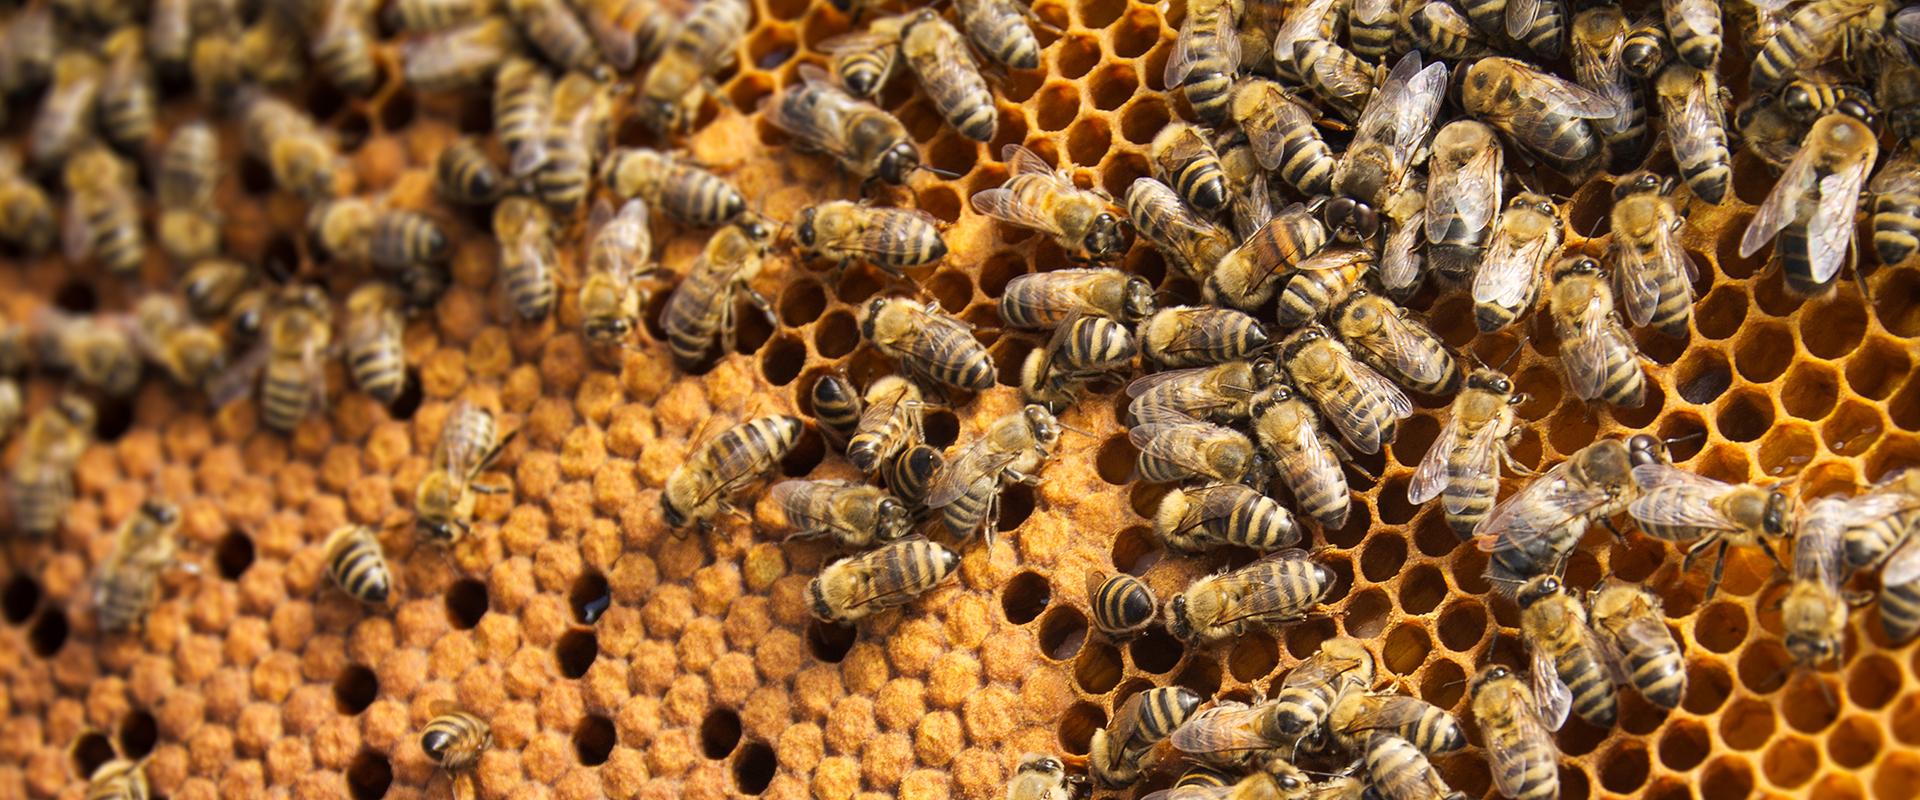 honey bees on a honey comb